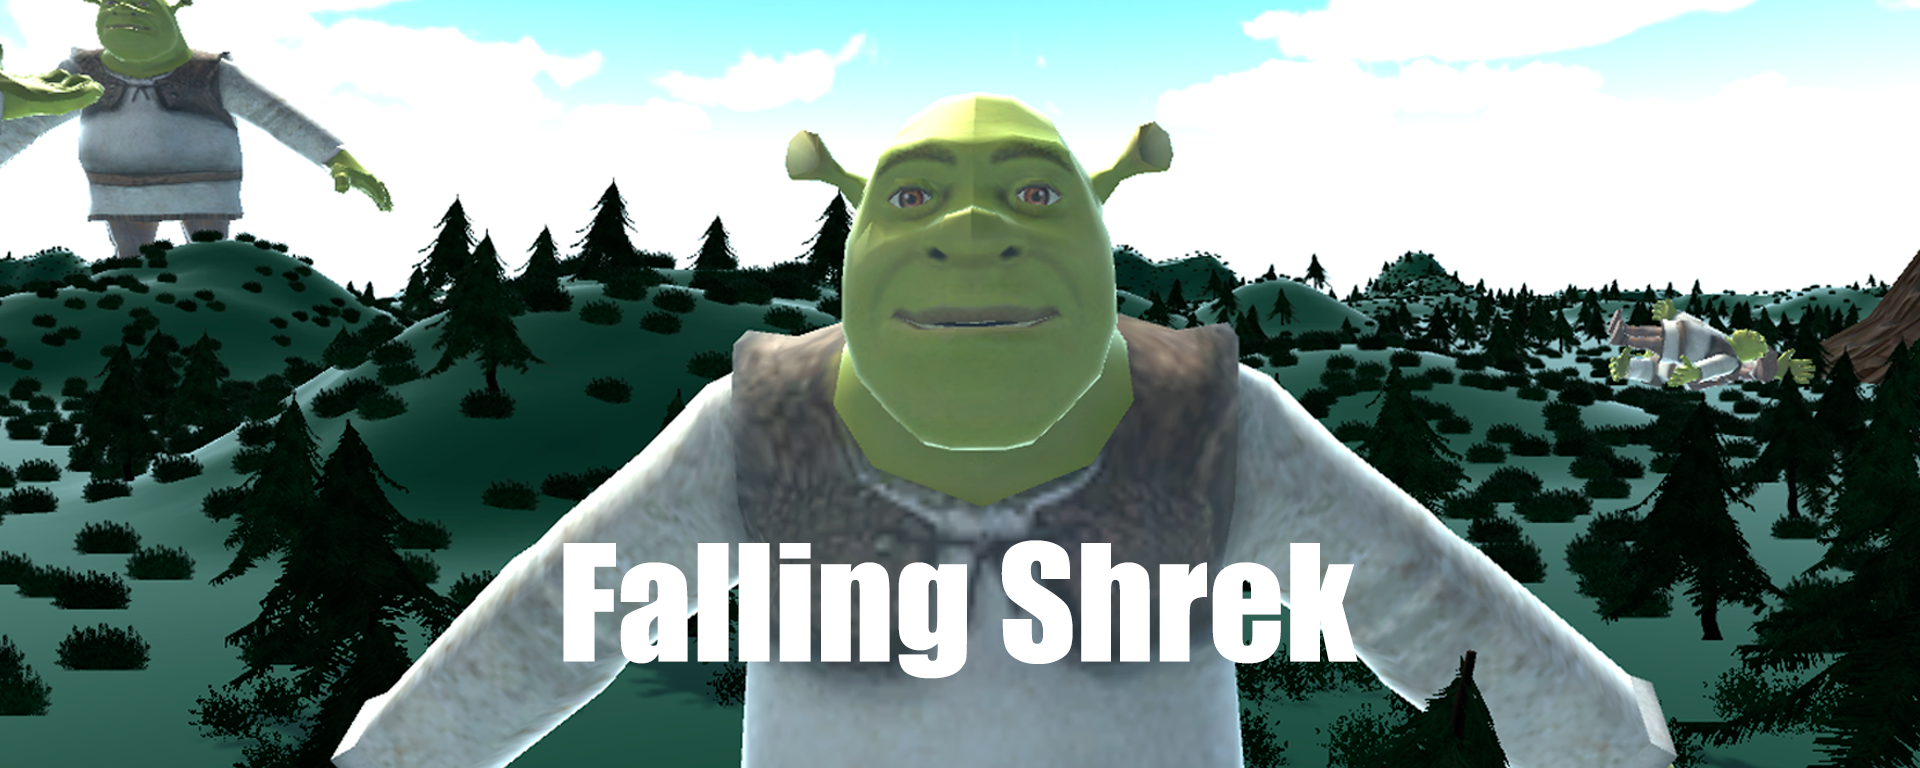 Falling Shrek